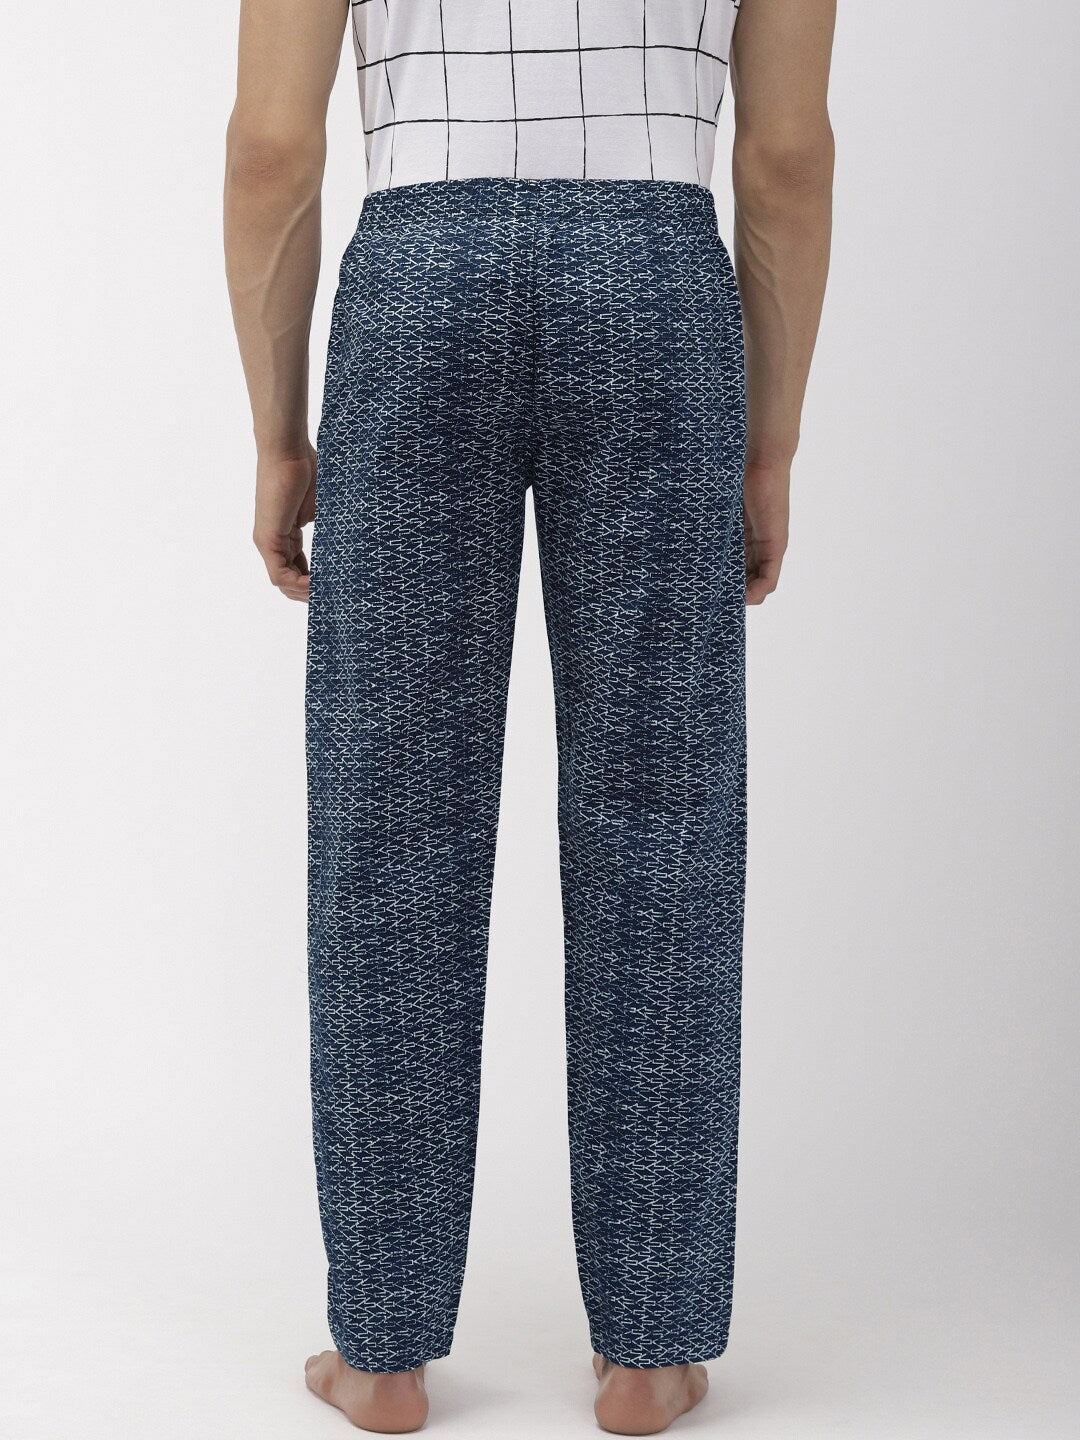 Shop Men Printed Lounge Pants Online.